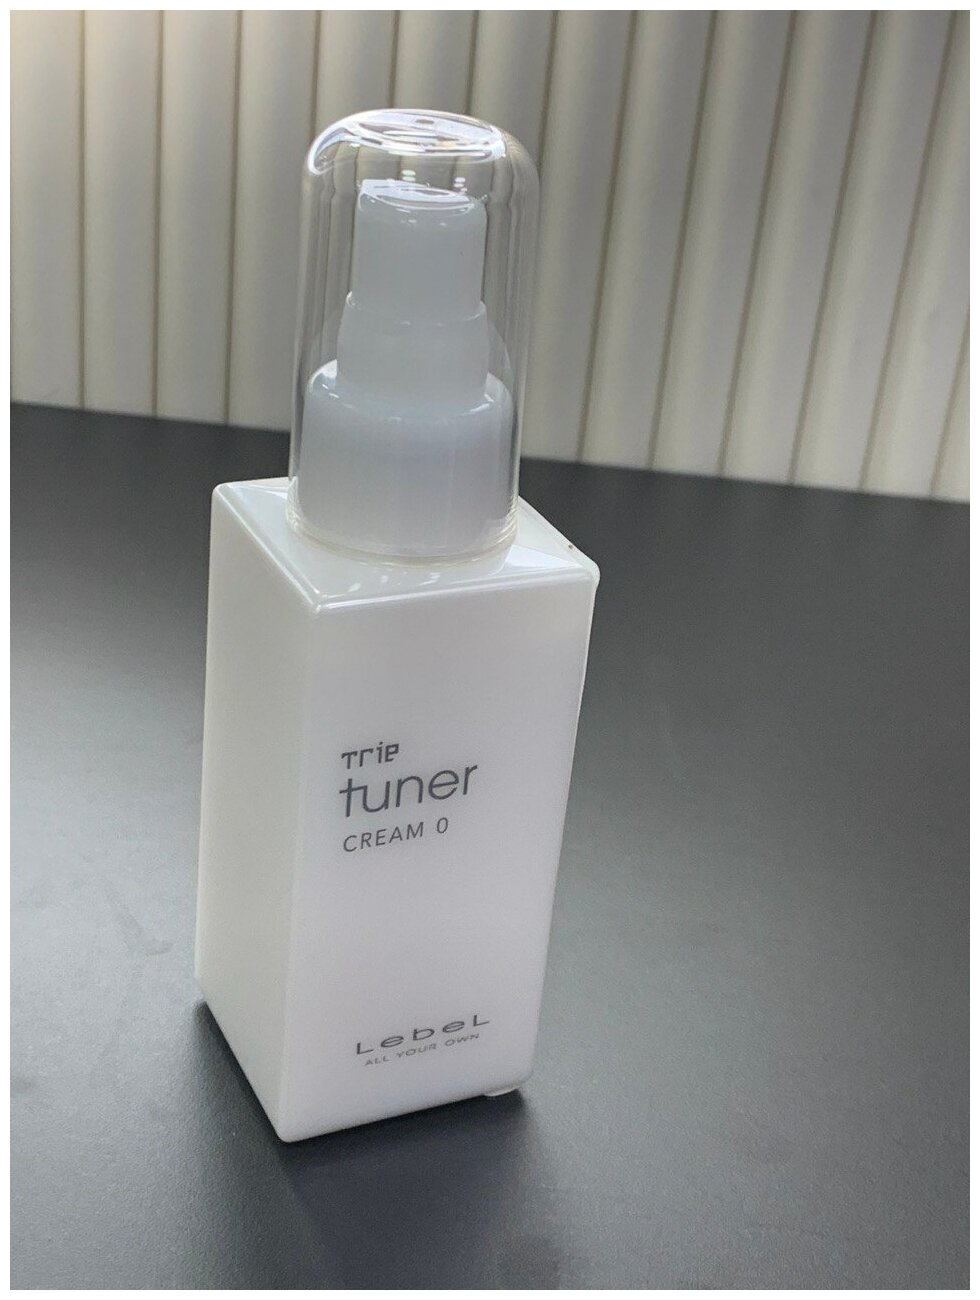 Lebel Trie Tuner: Разглаживающий крем для укладки волос без фиксации (Cream 0), 95 мл